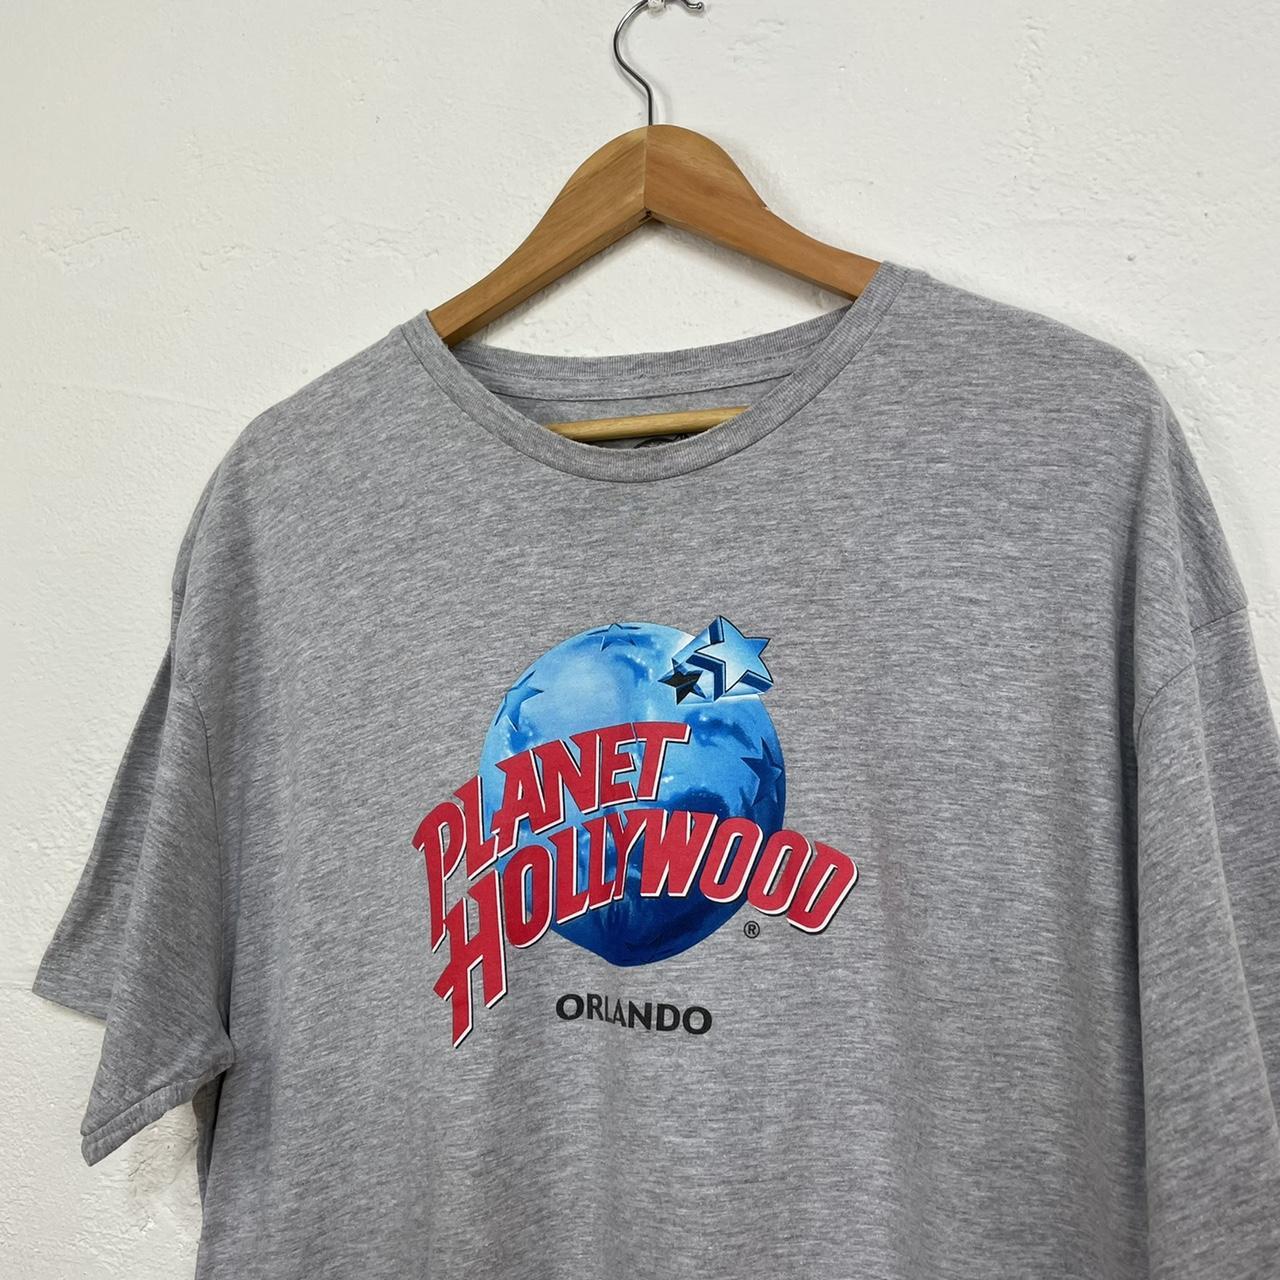 PLANET HOLLYWOOD Orlando vintage logo t shirt... - Depop